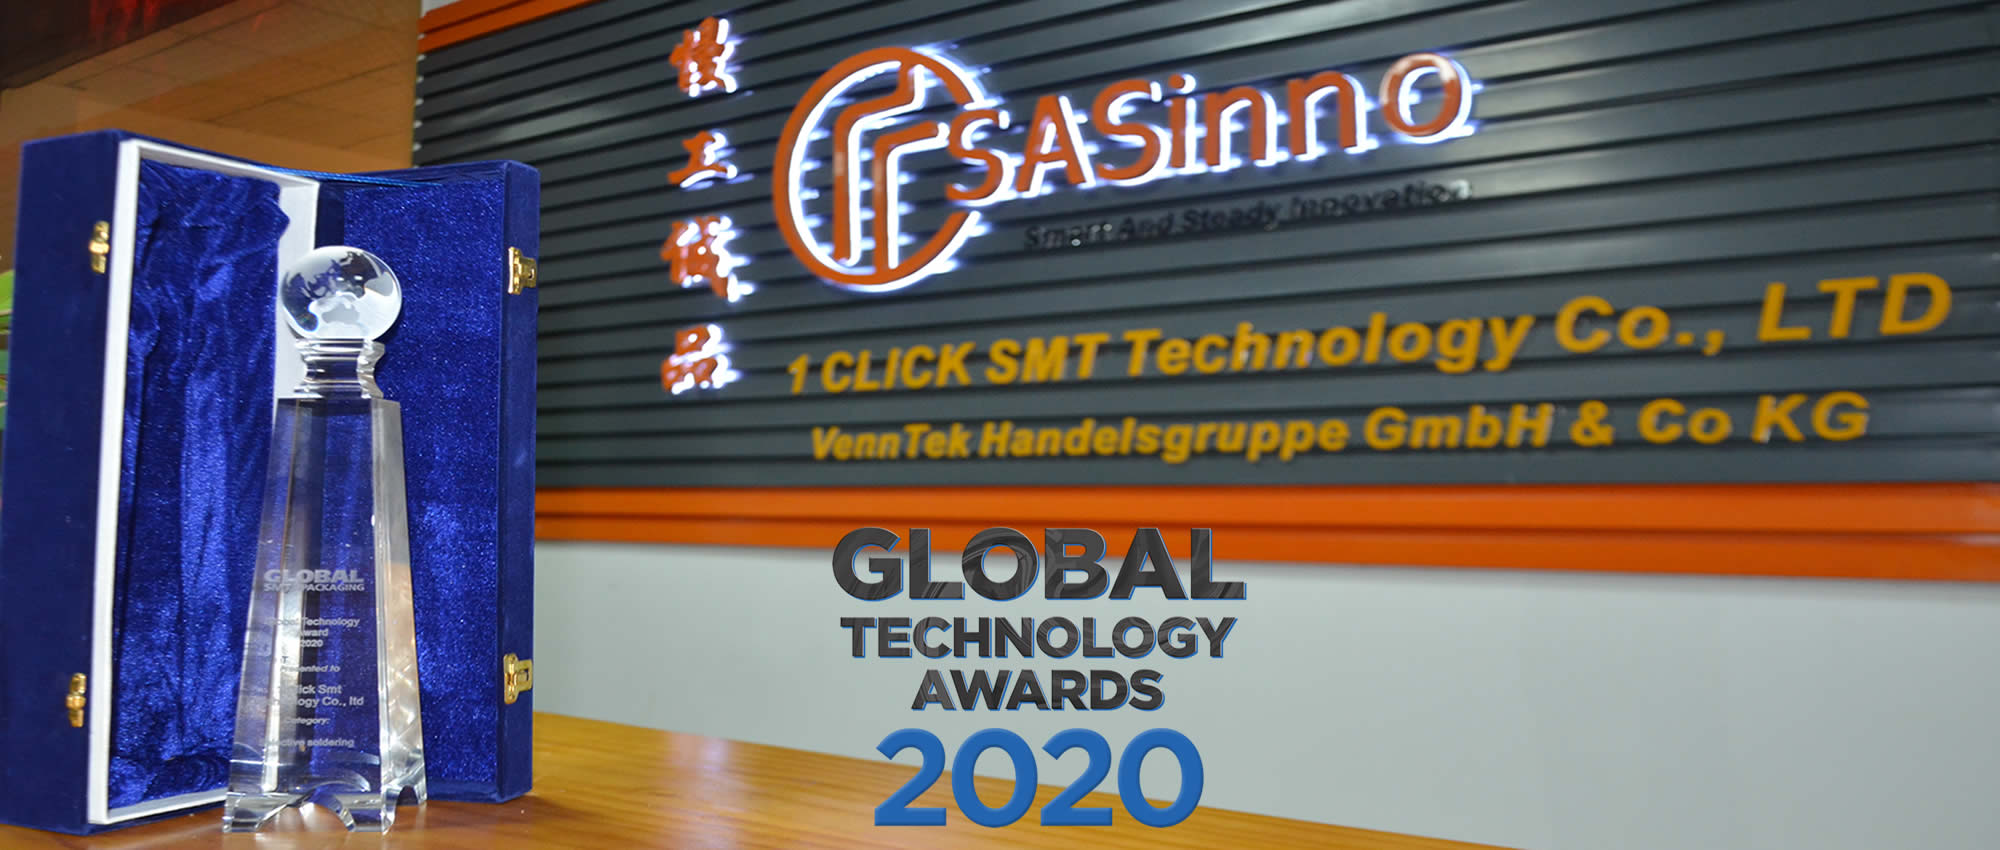 SASinno Global Technology Award 2020 ANTi1 Series